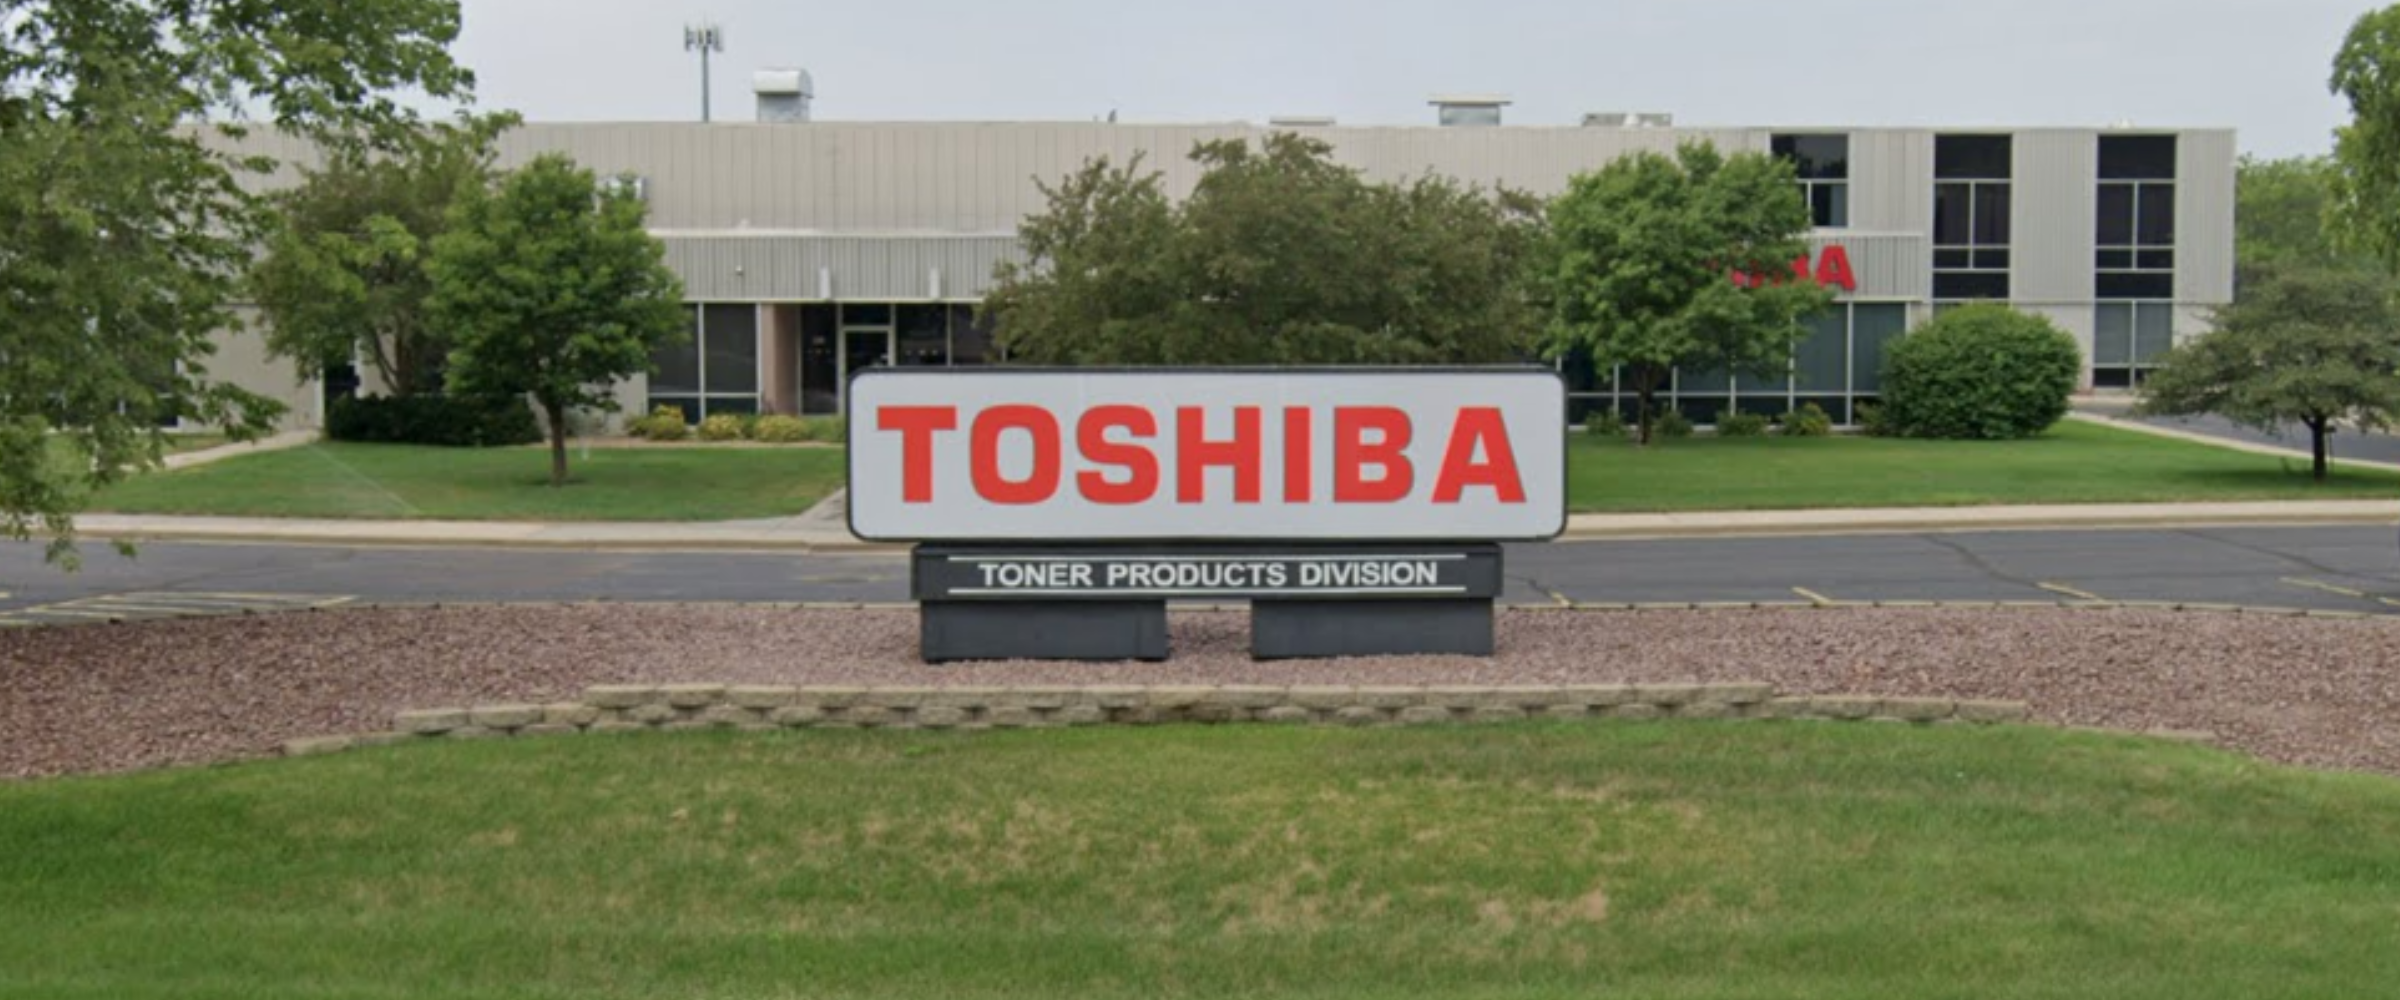 Toshiba Toner Division